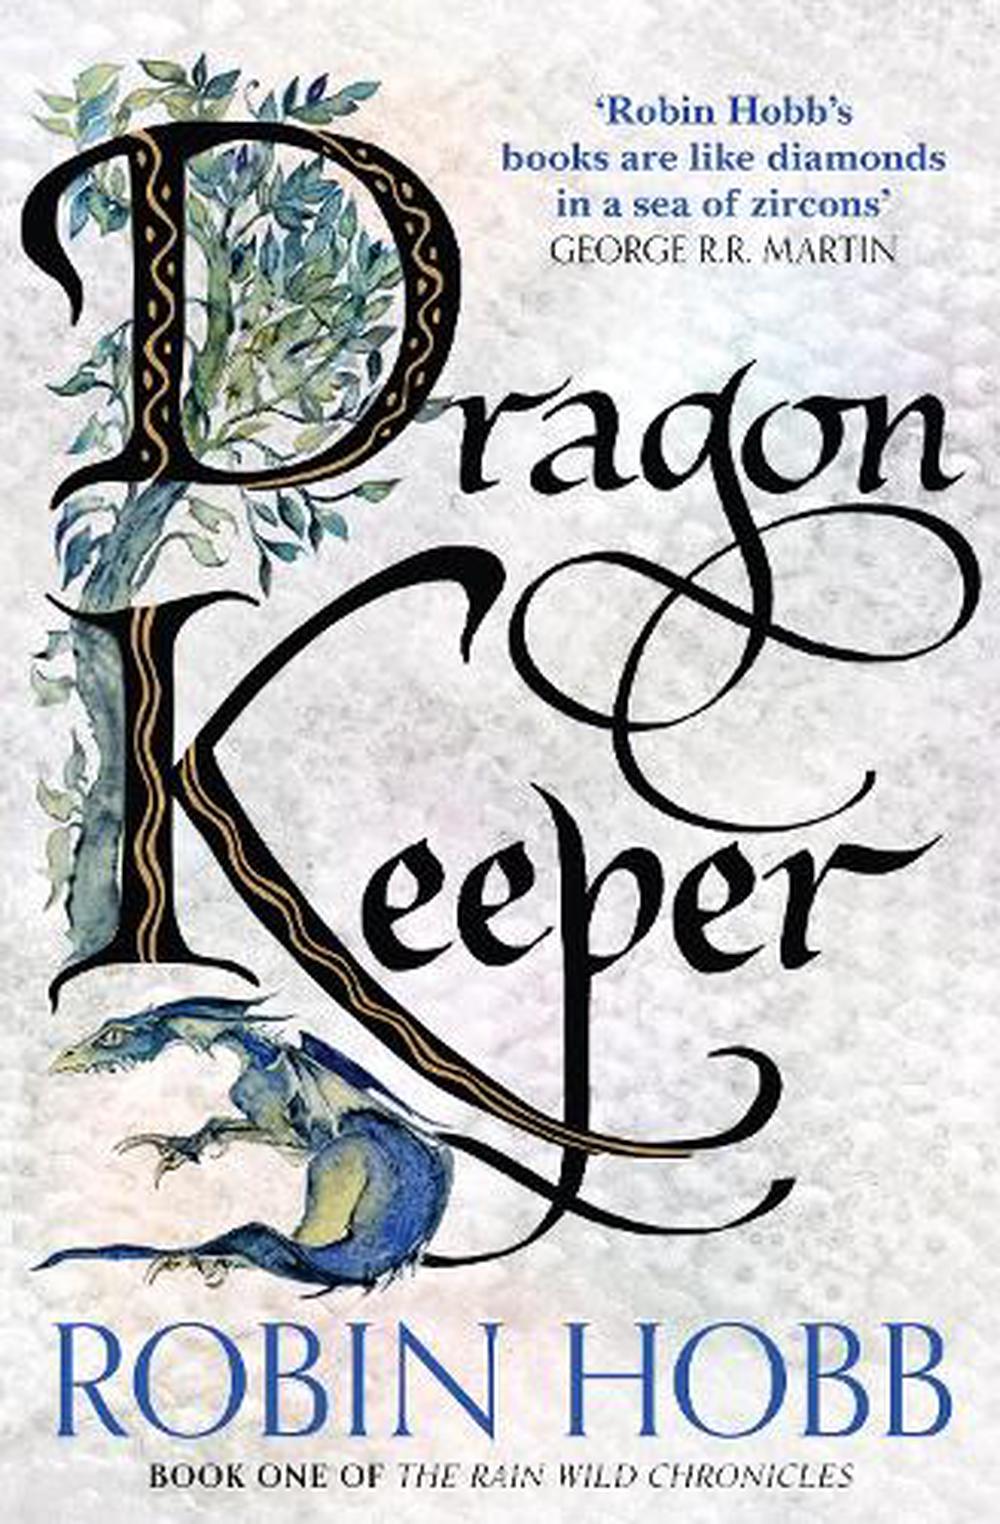 the dragon keeper book